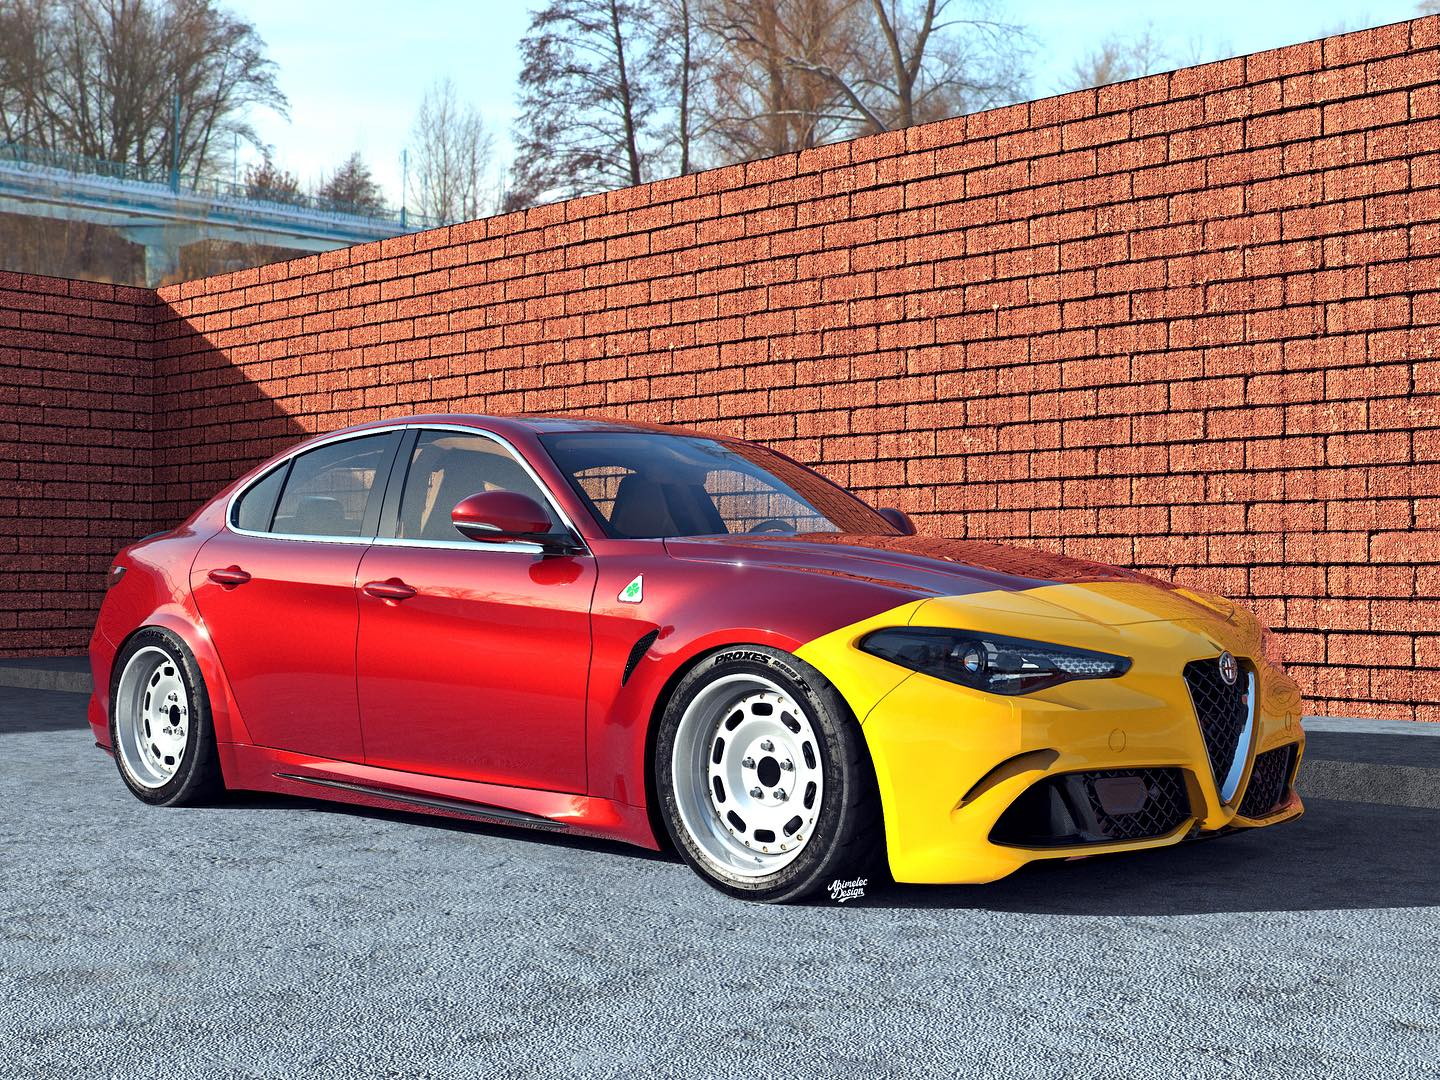 Retro-Modded Alfa Romeo Giulia Quadrifoglio Looks Sick in Unofficial CGIs